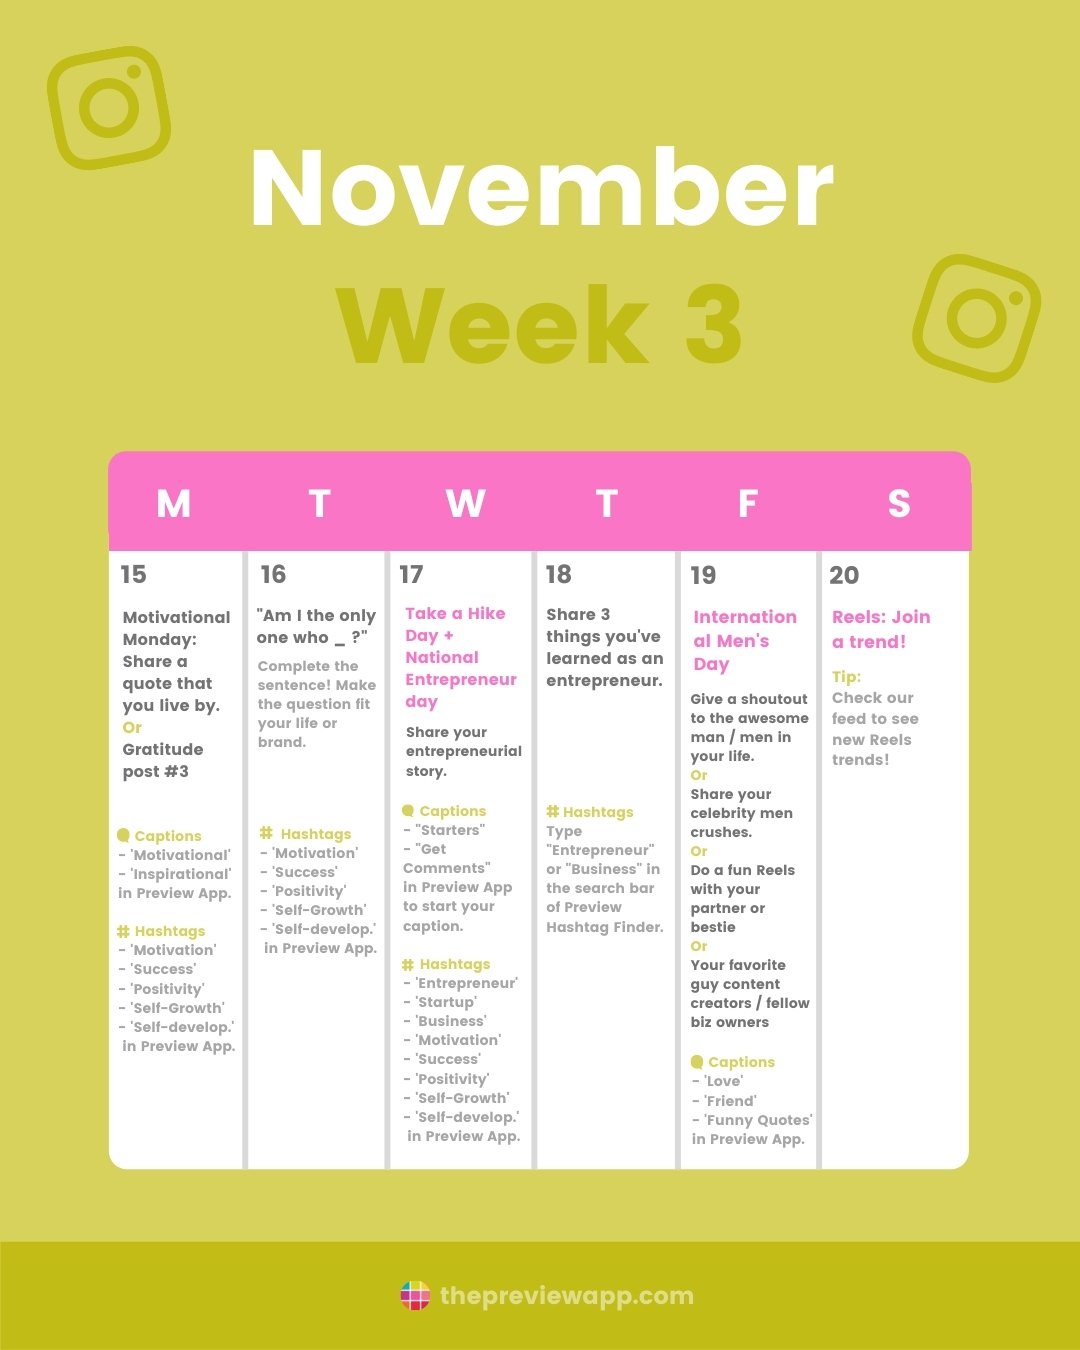 30+ Unique November Instagram Post Ideas (with Caption + Hashtags)